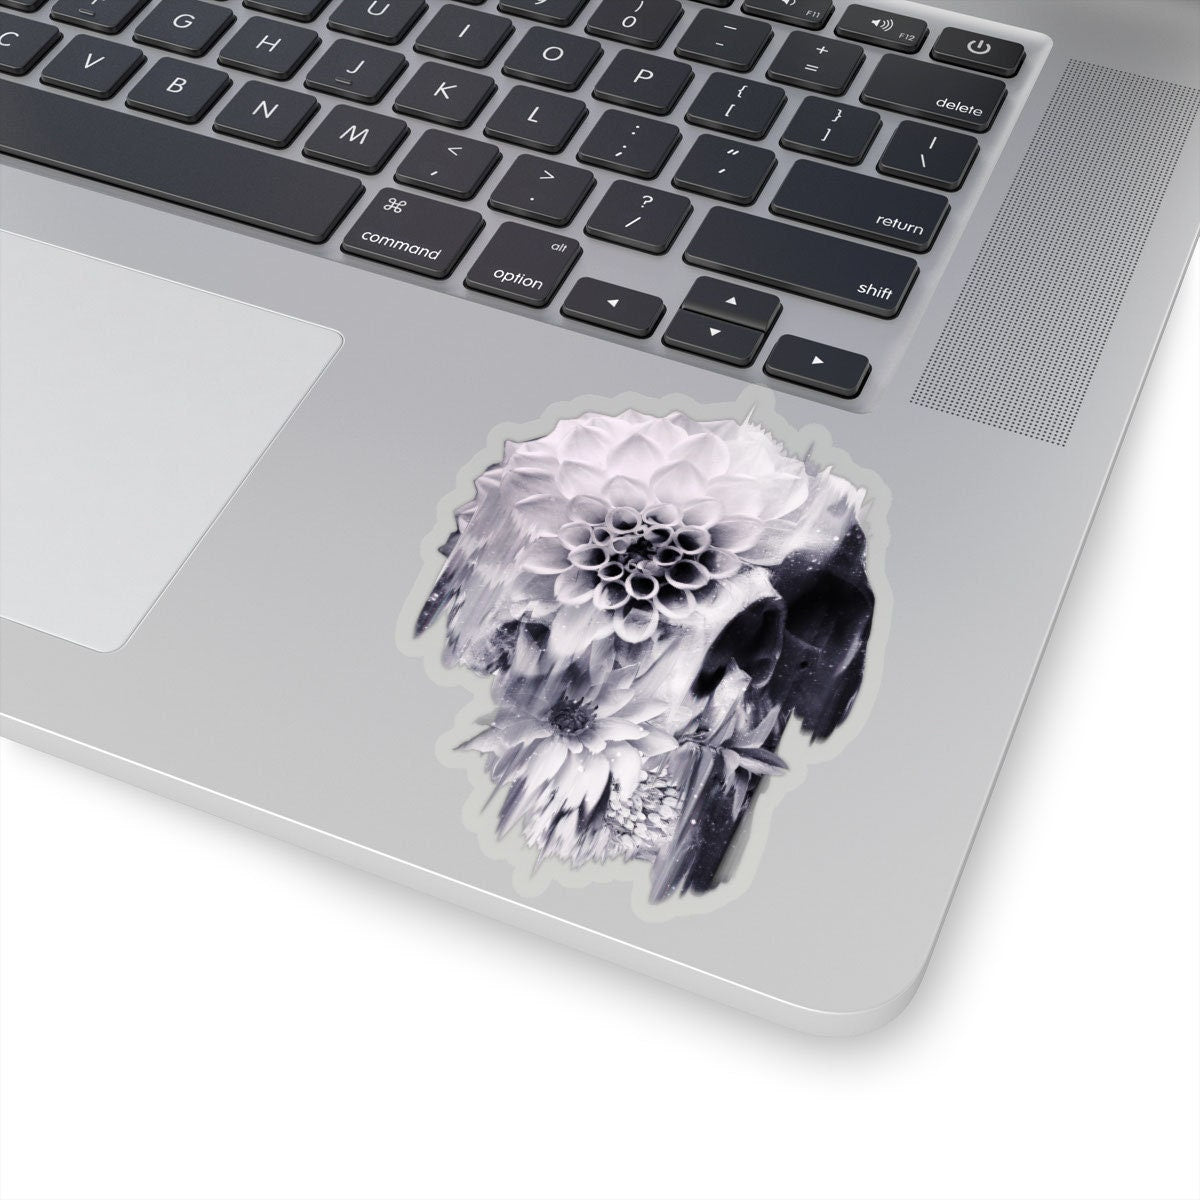 Floral Skull Sticker, Gothic Skull Art Sticker, Premium Sugar Skull Art Vinyl Sticker, Skull Art Sticker Gift, Laptop Phone Kiss-Cut Sticker